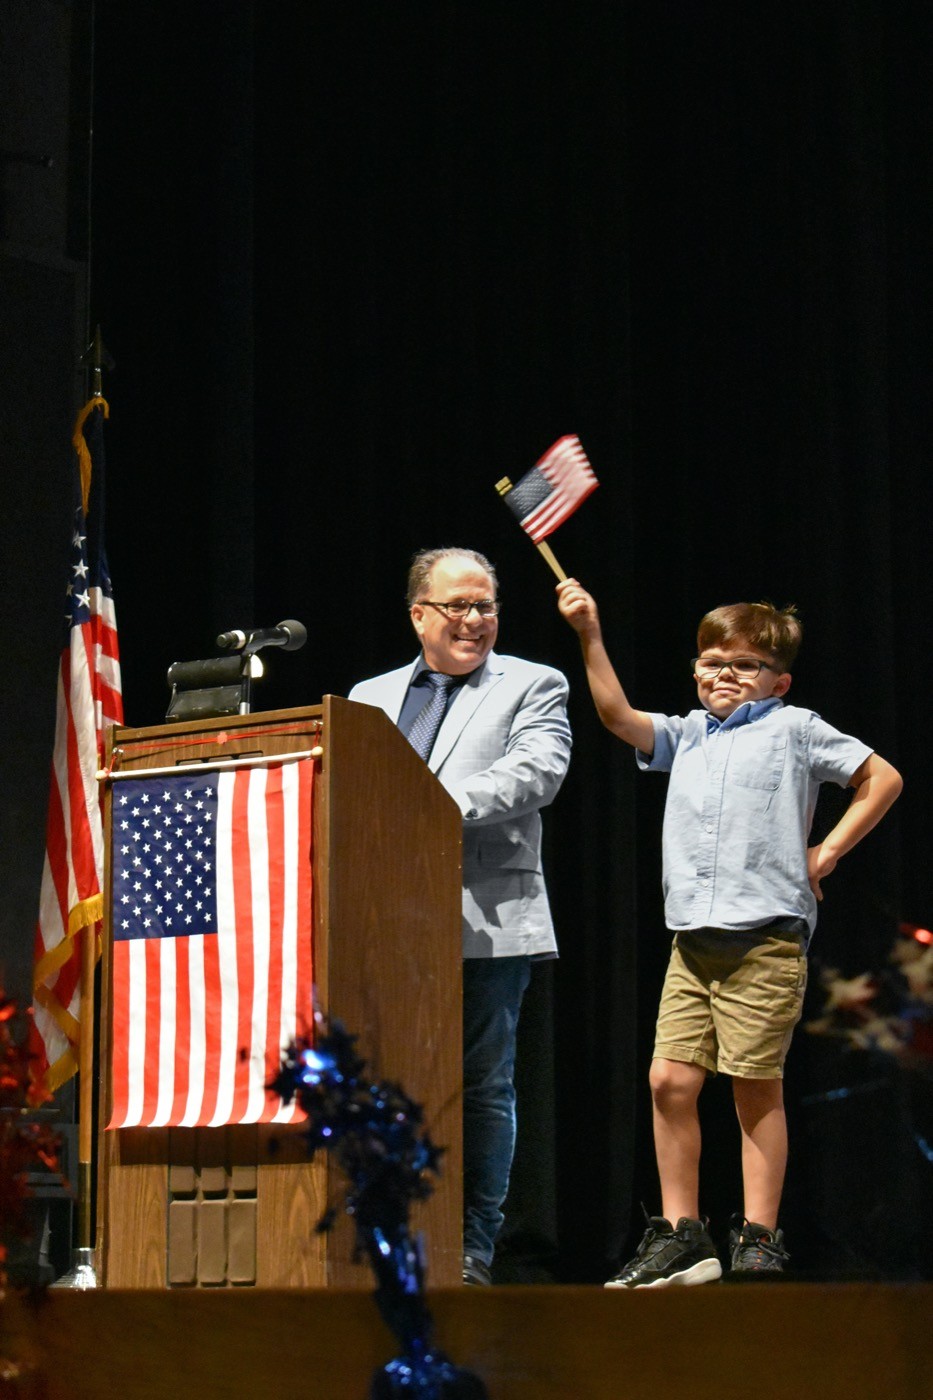 Student waving flag